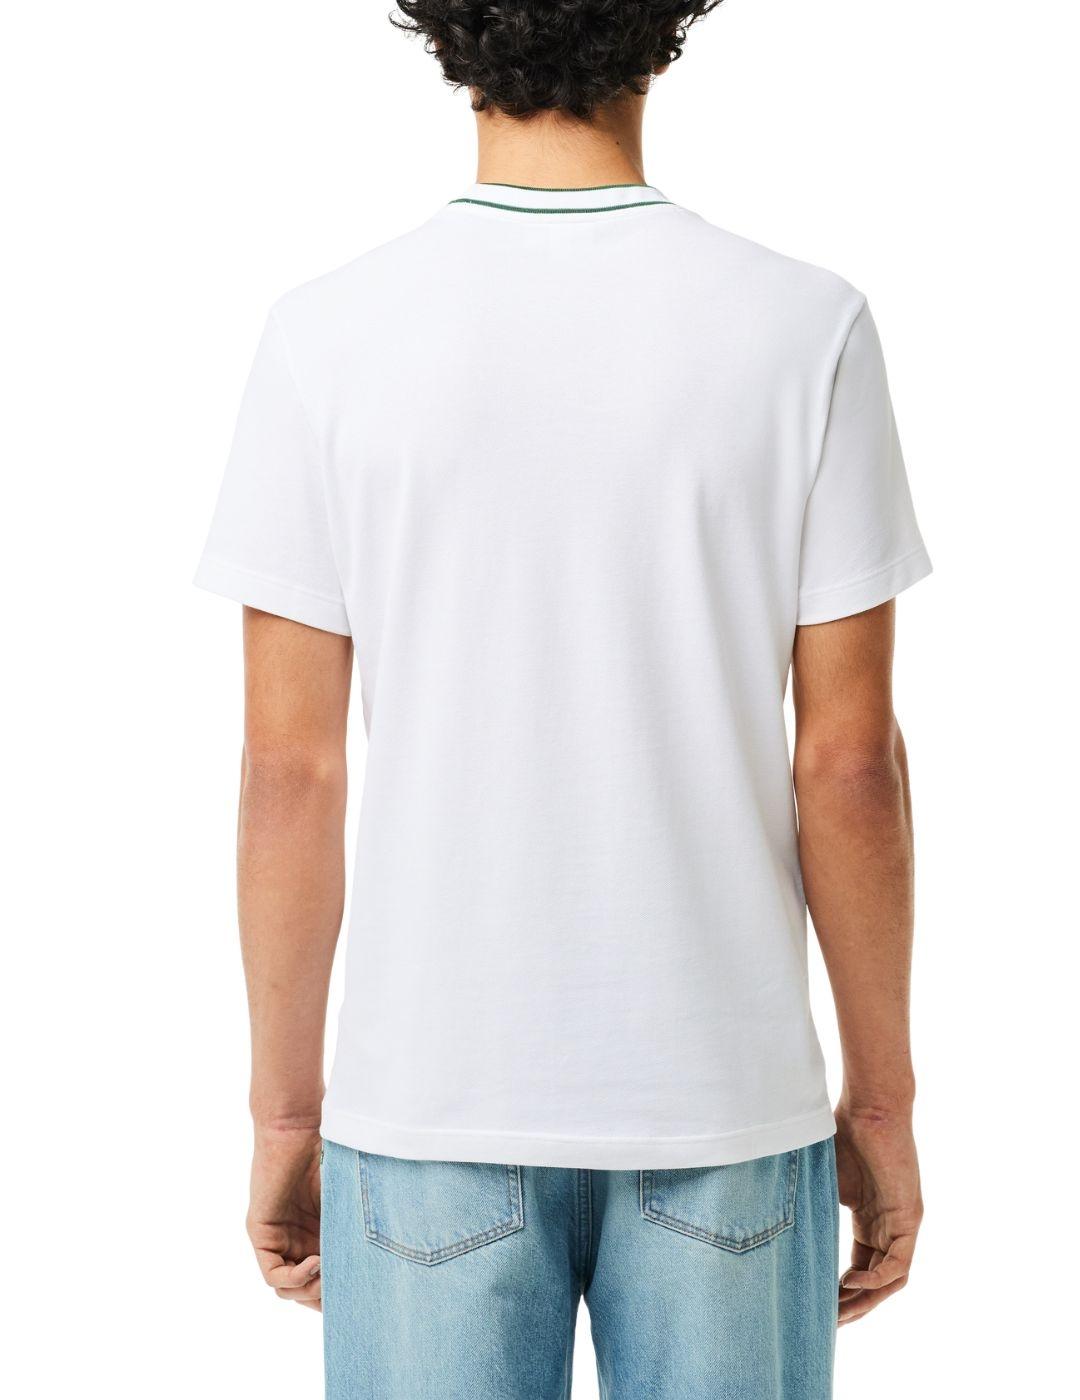 Camiseta Lacoste en piqué elástico de manga corta de hombre